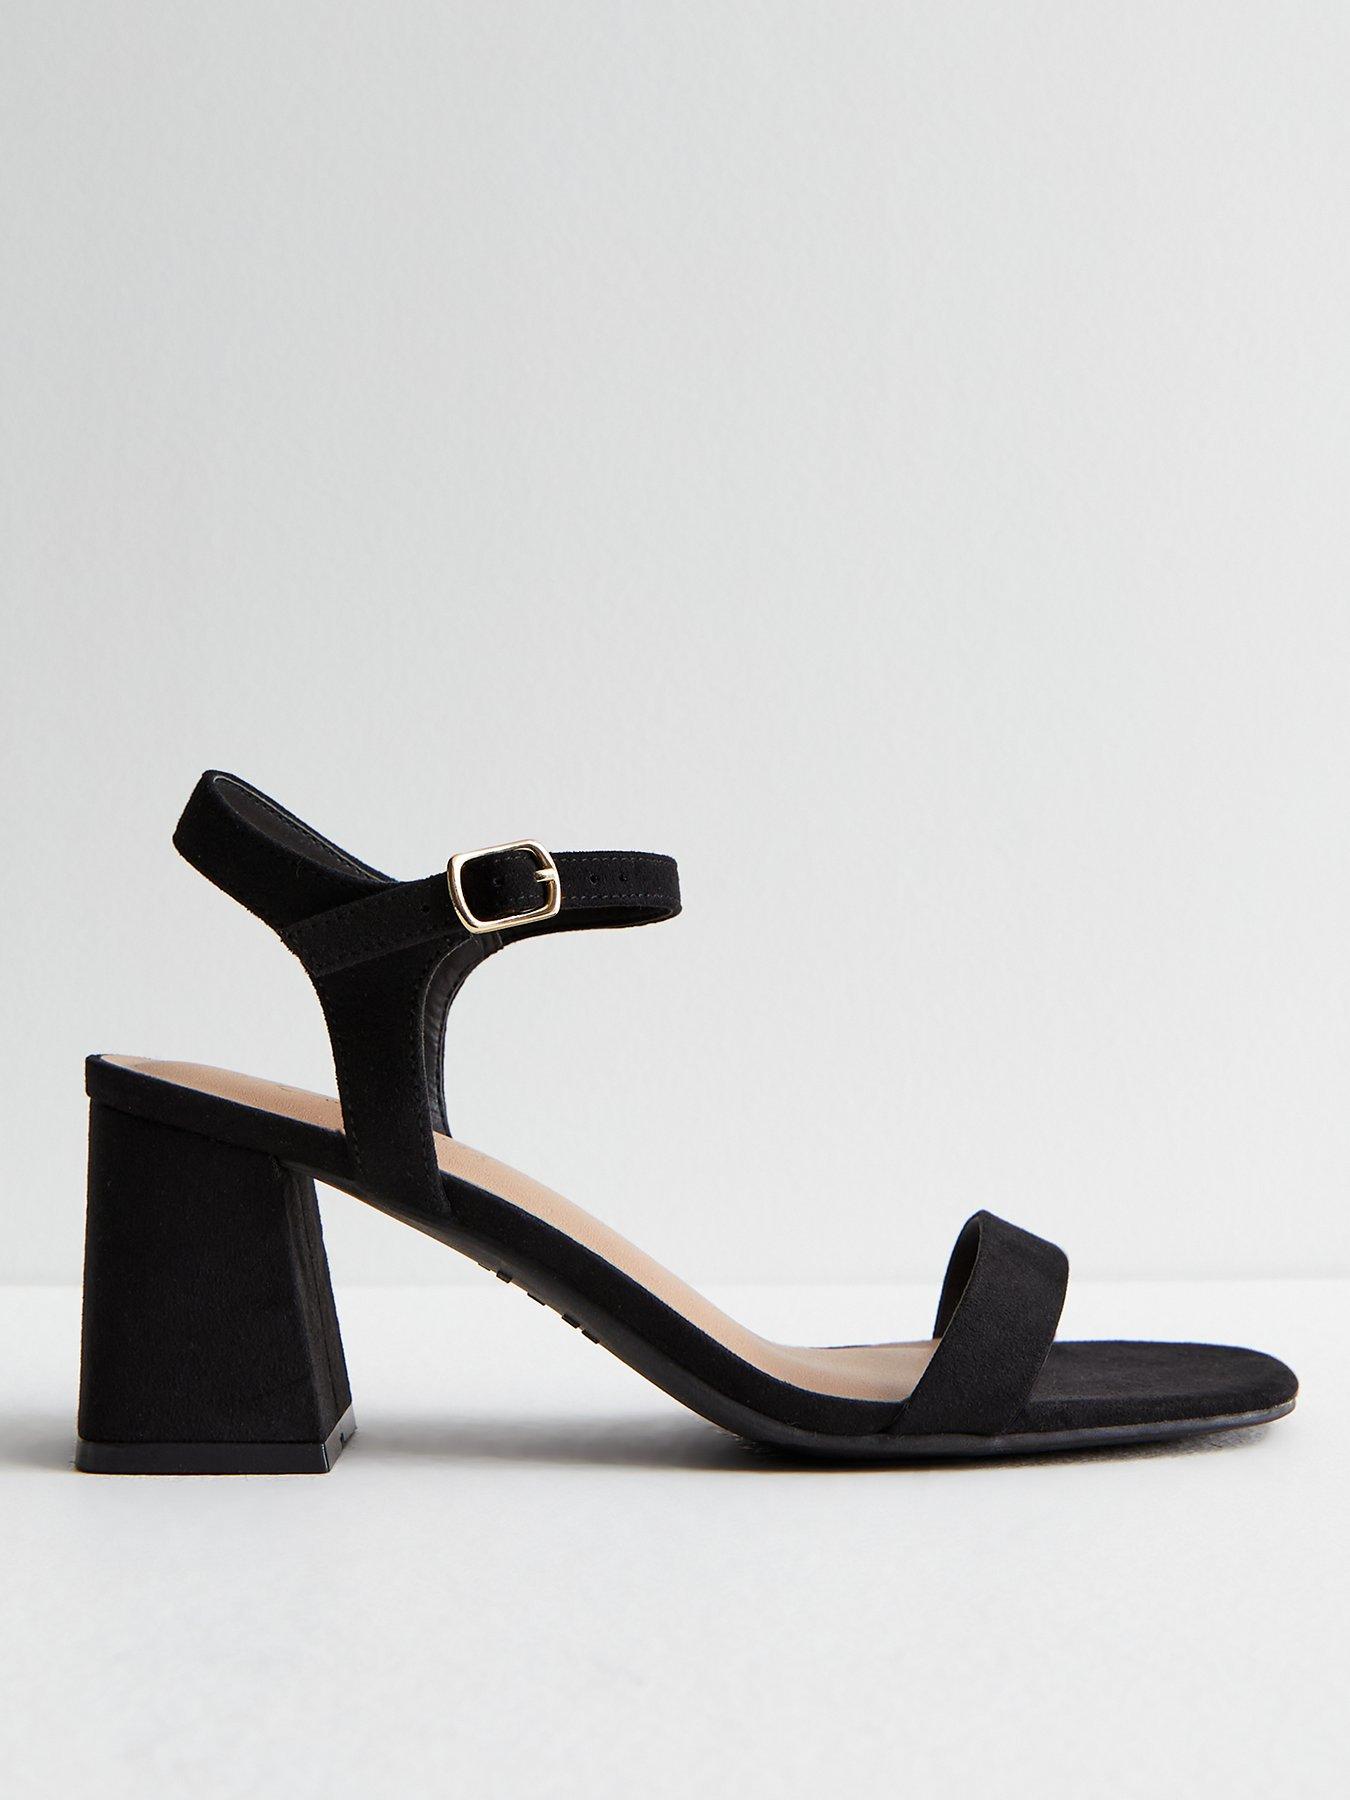 NEW LOOK Ladies Womens Shoes Size UK 3 EU 36 Black Platform Heels | eBay